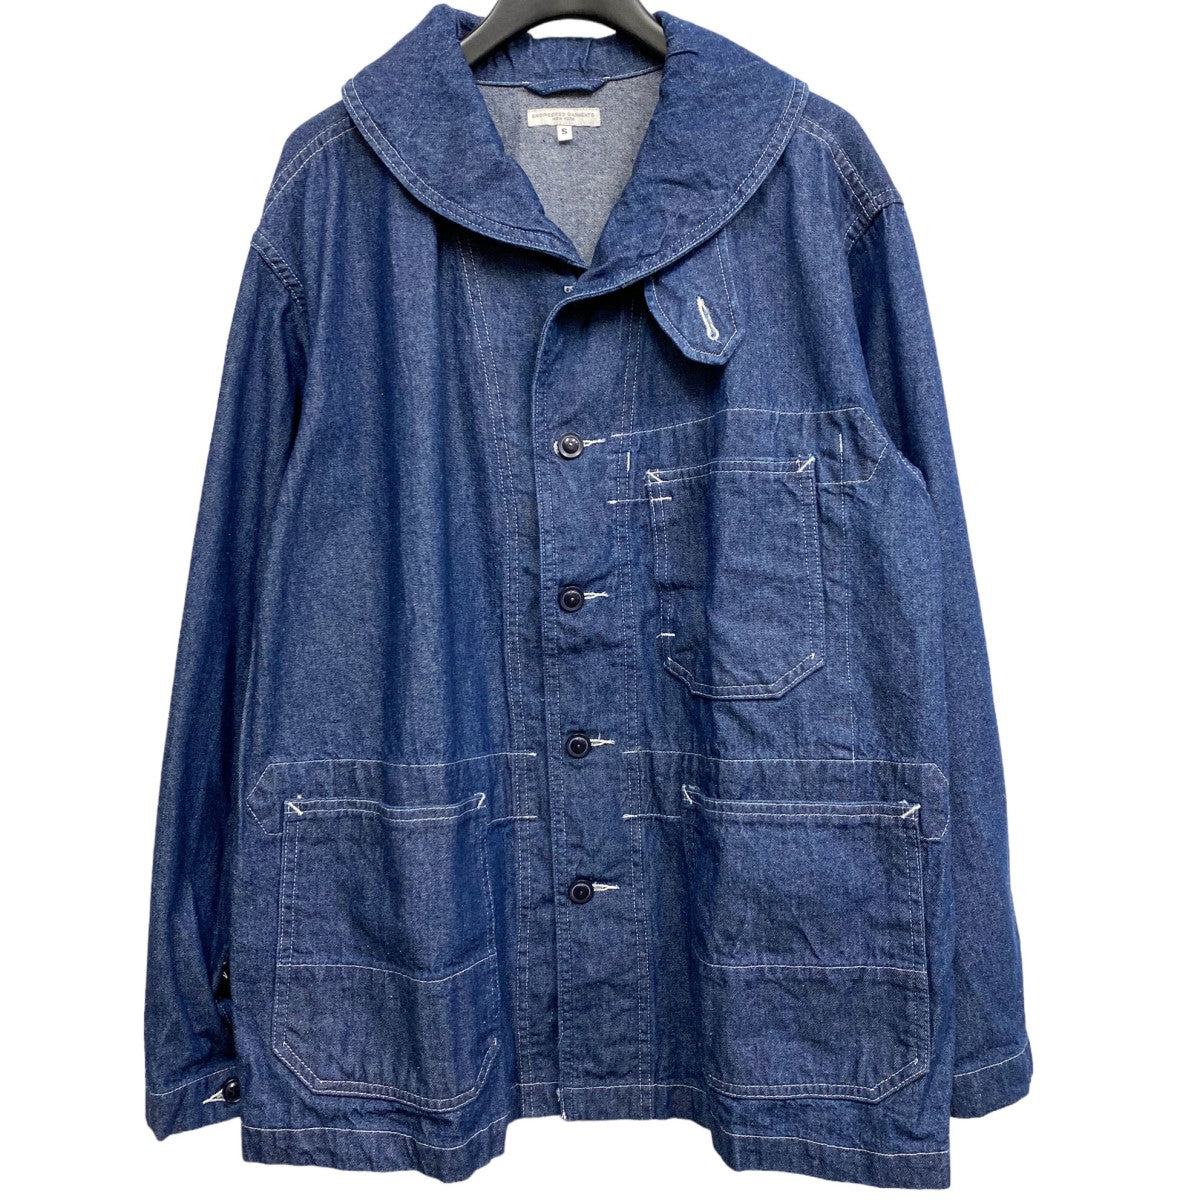 Engineered Garments(エンジニアードガーメンツ) Shawl Collar Utility jacket 8oz  denimショールカラーデニム